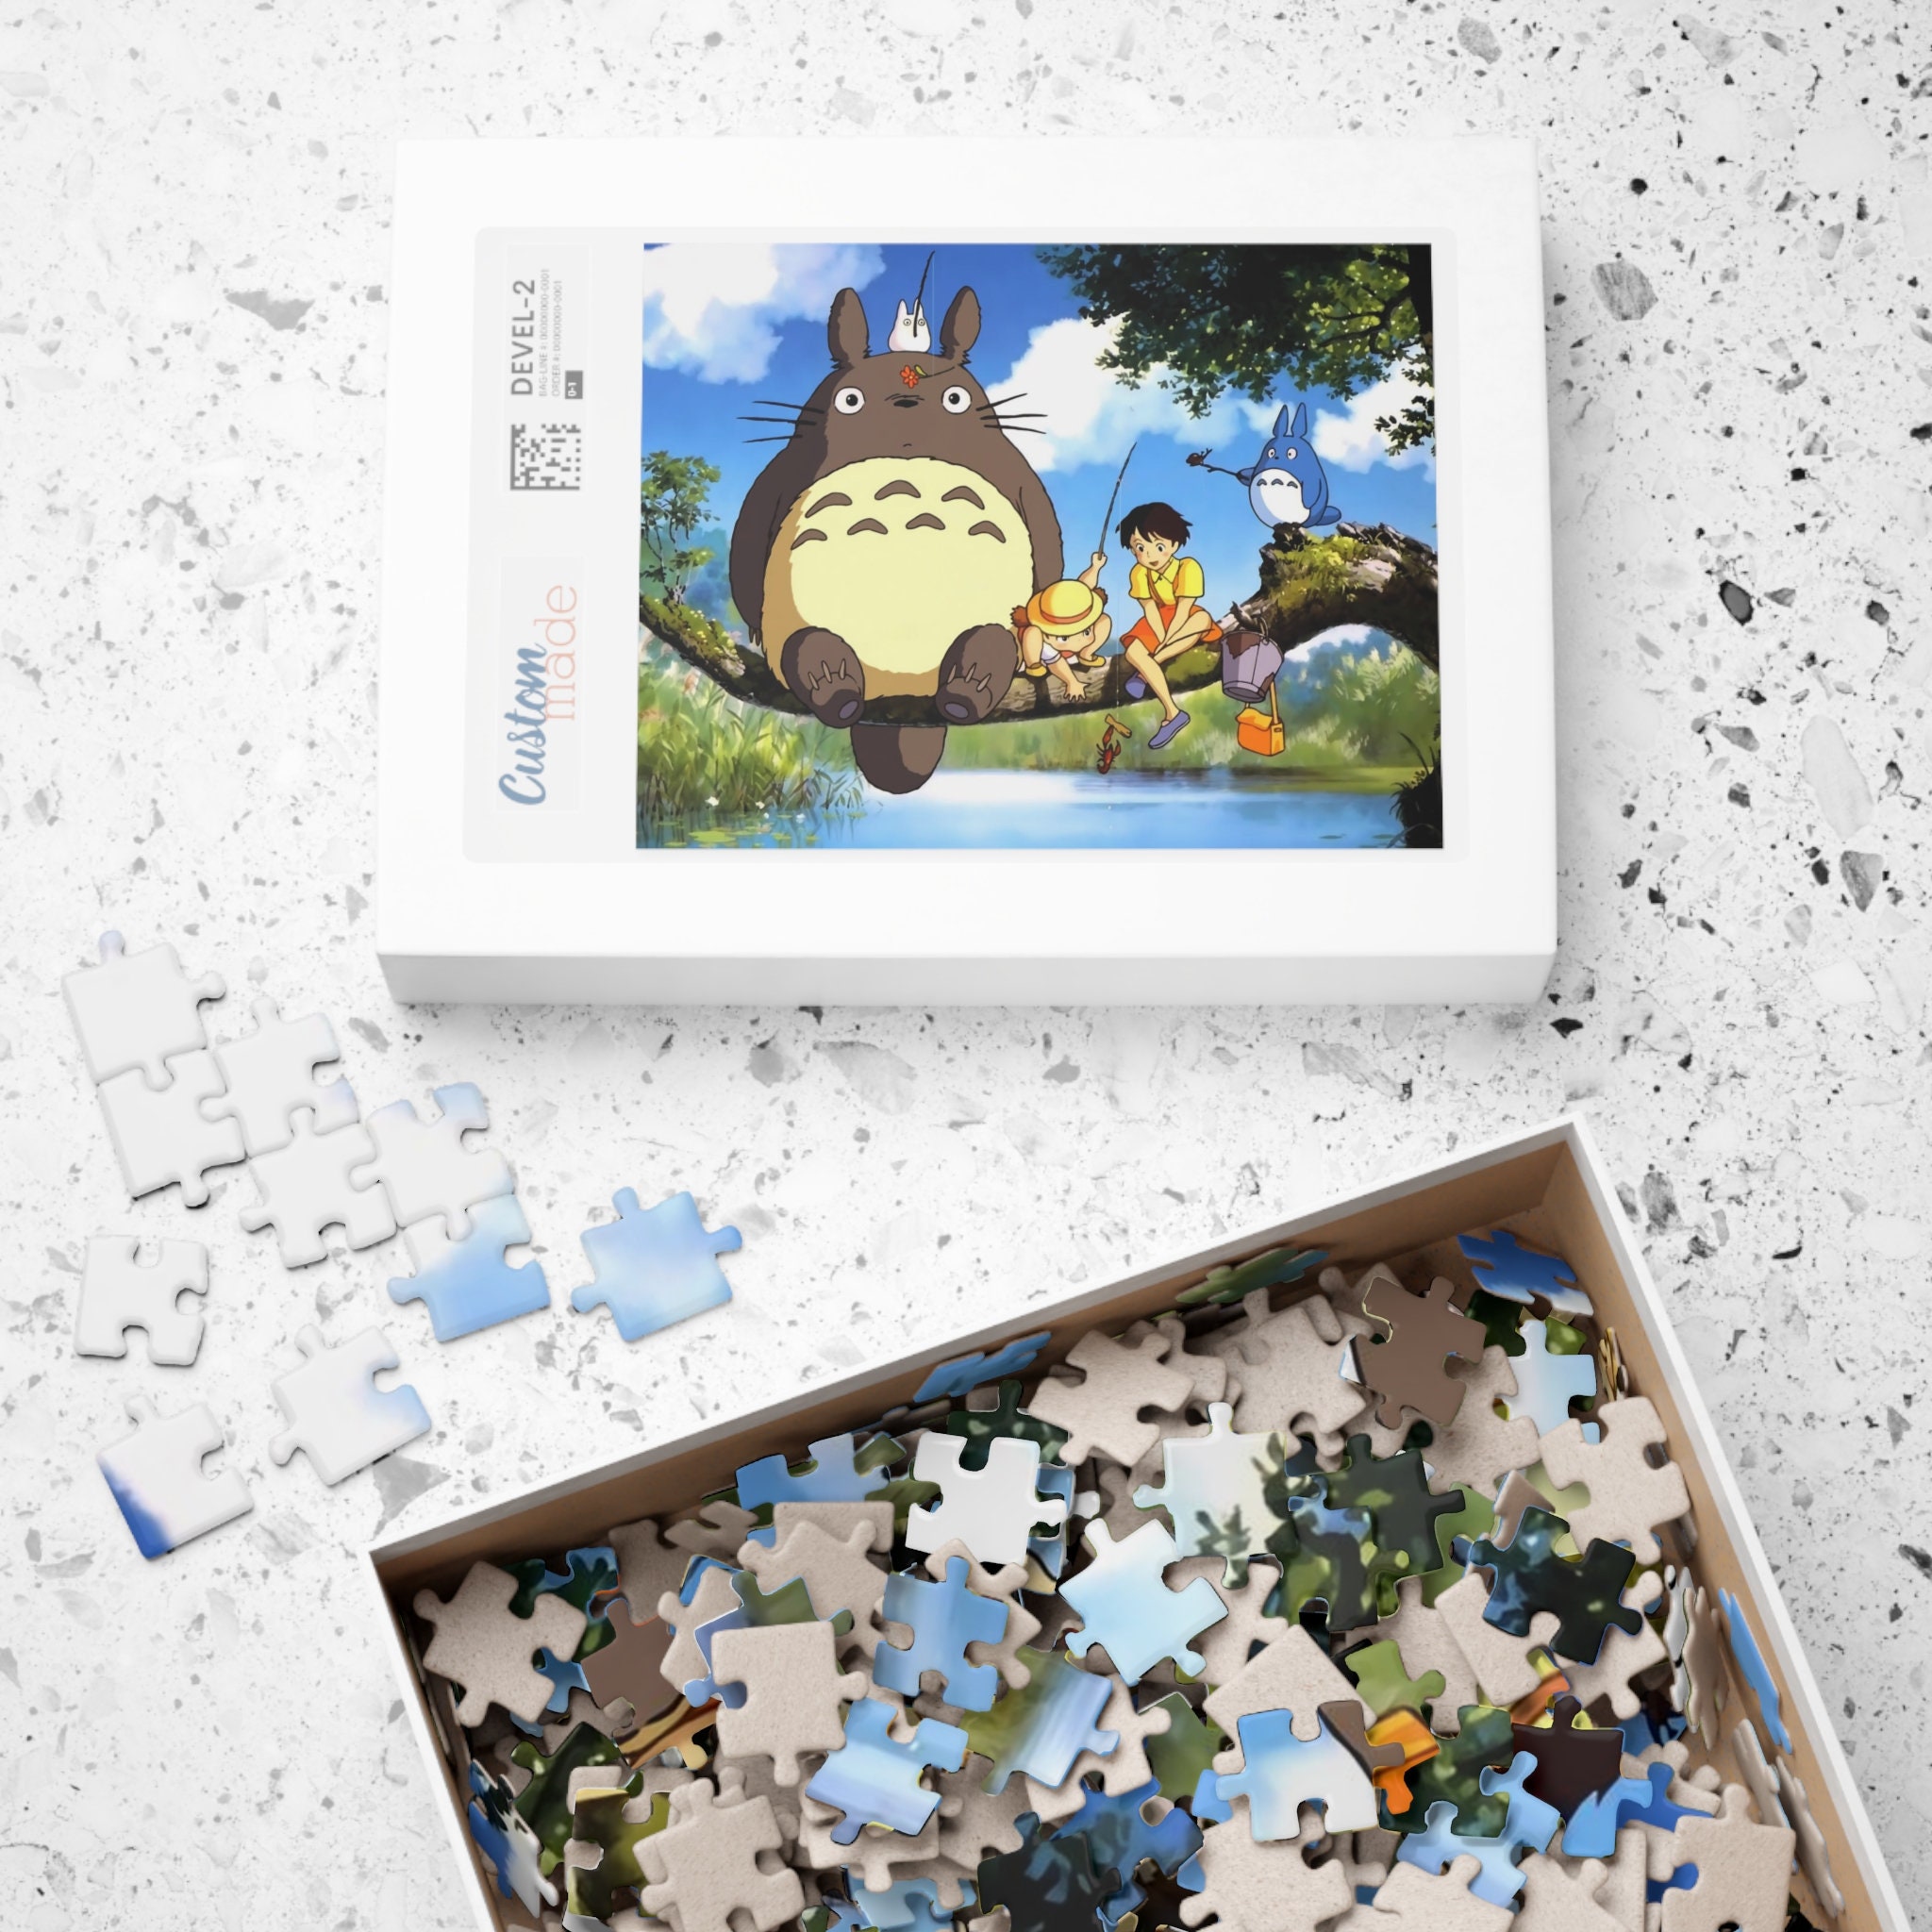 KM-73 Big Totoro 3D Puzzle My Neighbor Totoro, Ensky Puzzle